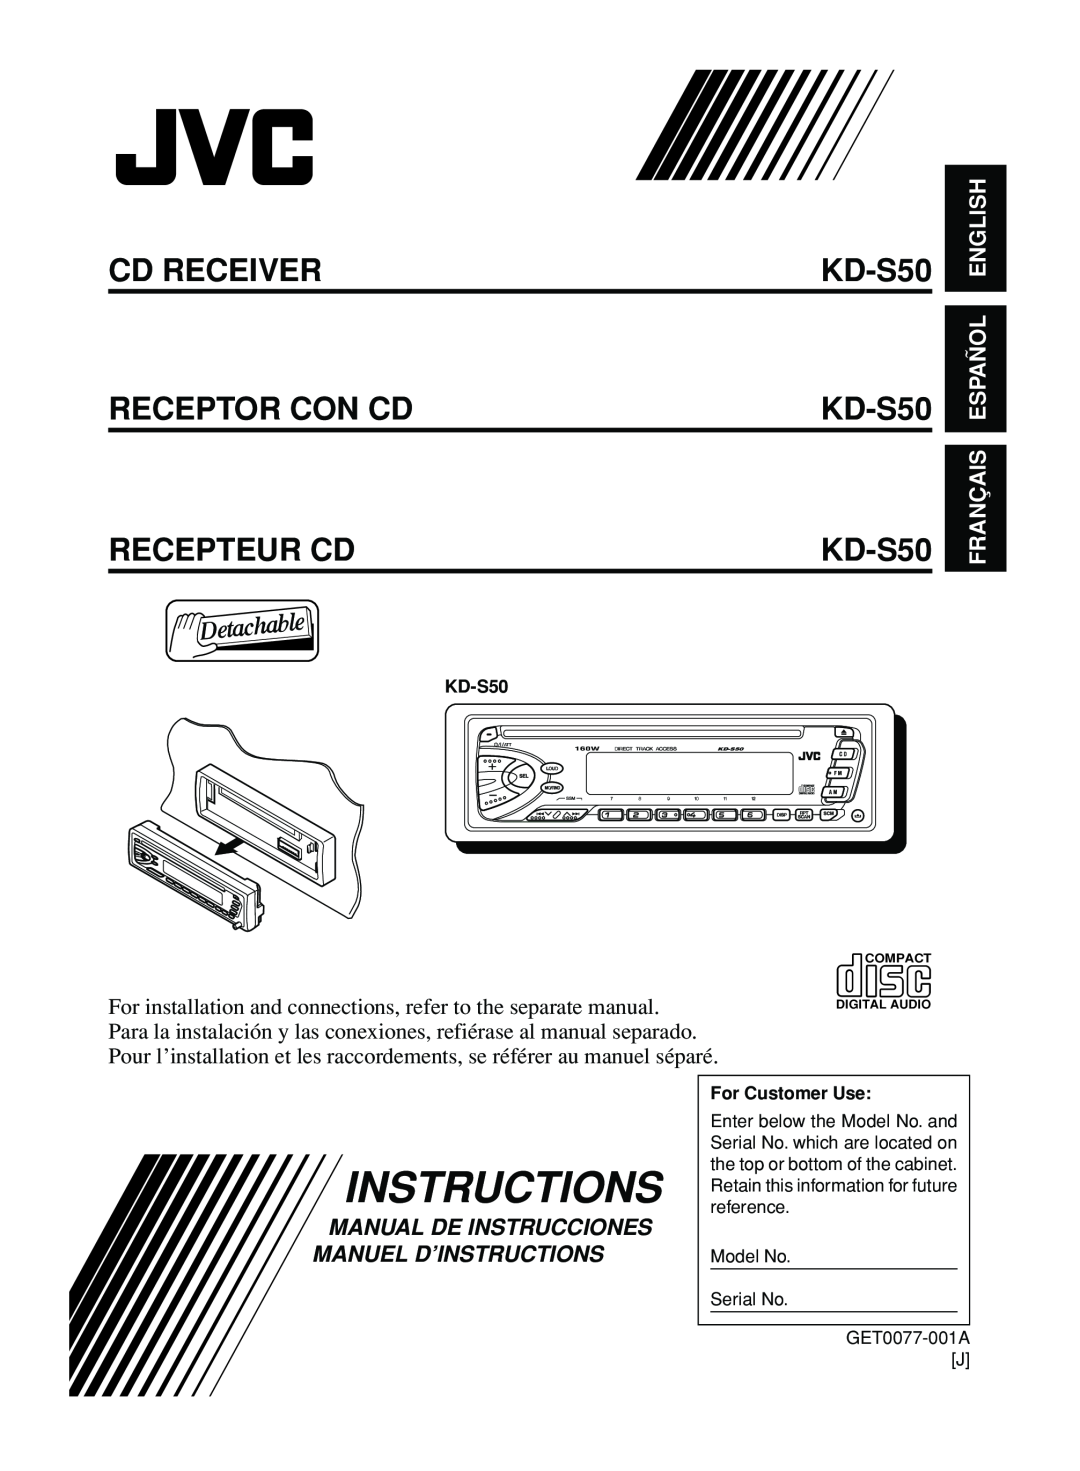 JVC manual Cd Receiver Receptor Con Cd Recepteur Cd, KD-S50 KD-S50 KD-S50, Français Español English, Instructions 